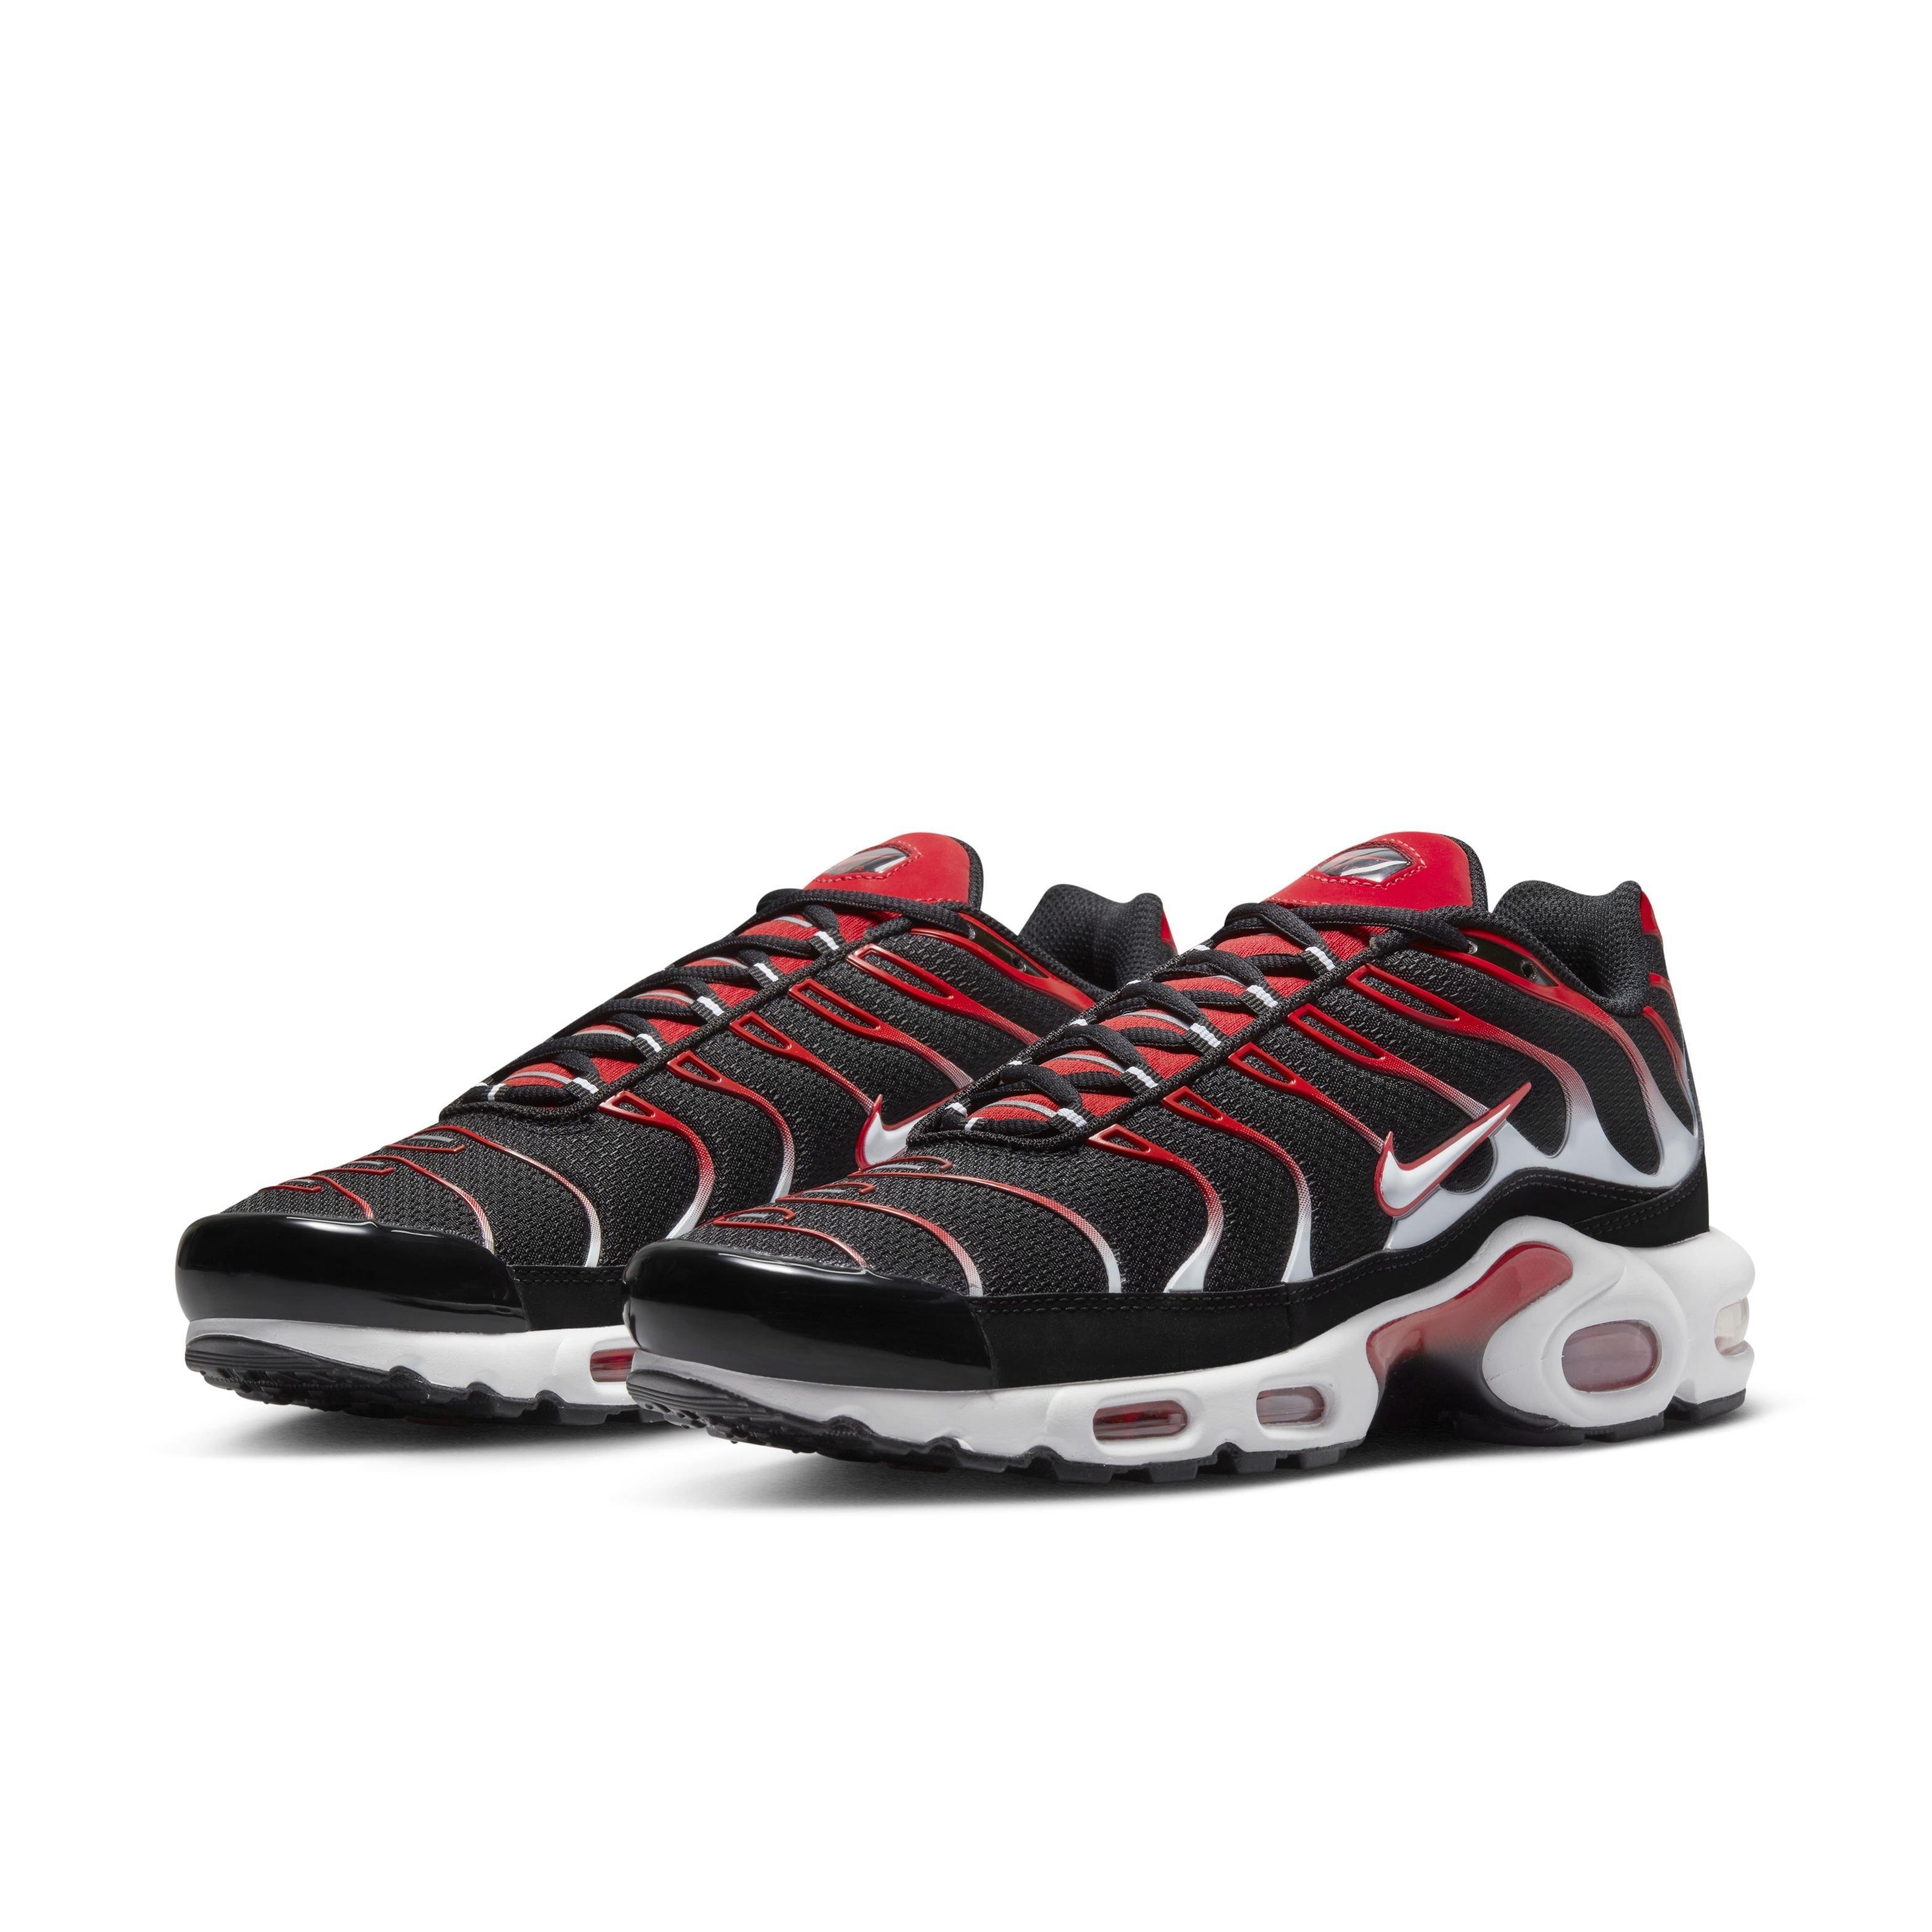 Nike Air Plus "Black/White/University Red" Men's Shoe